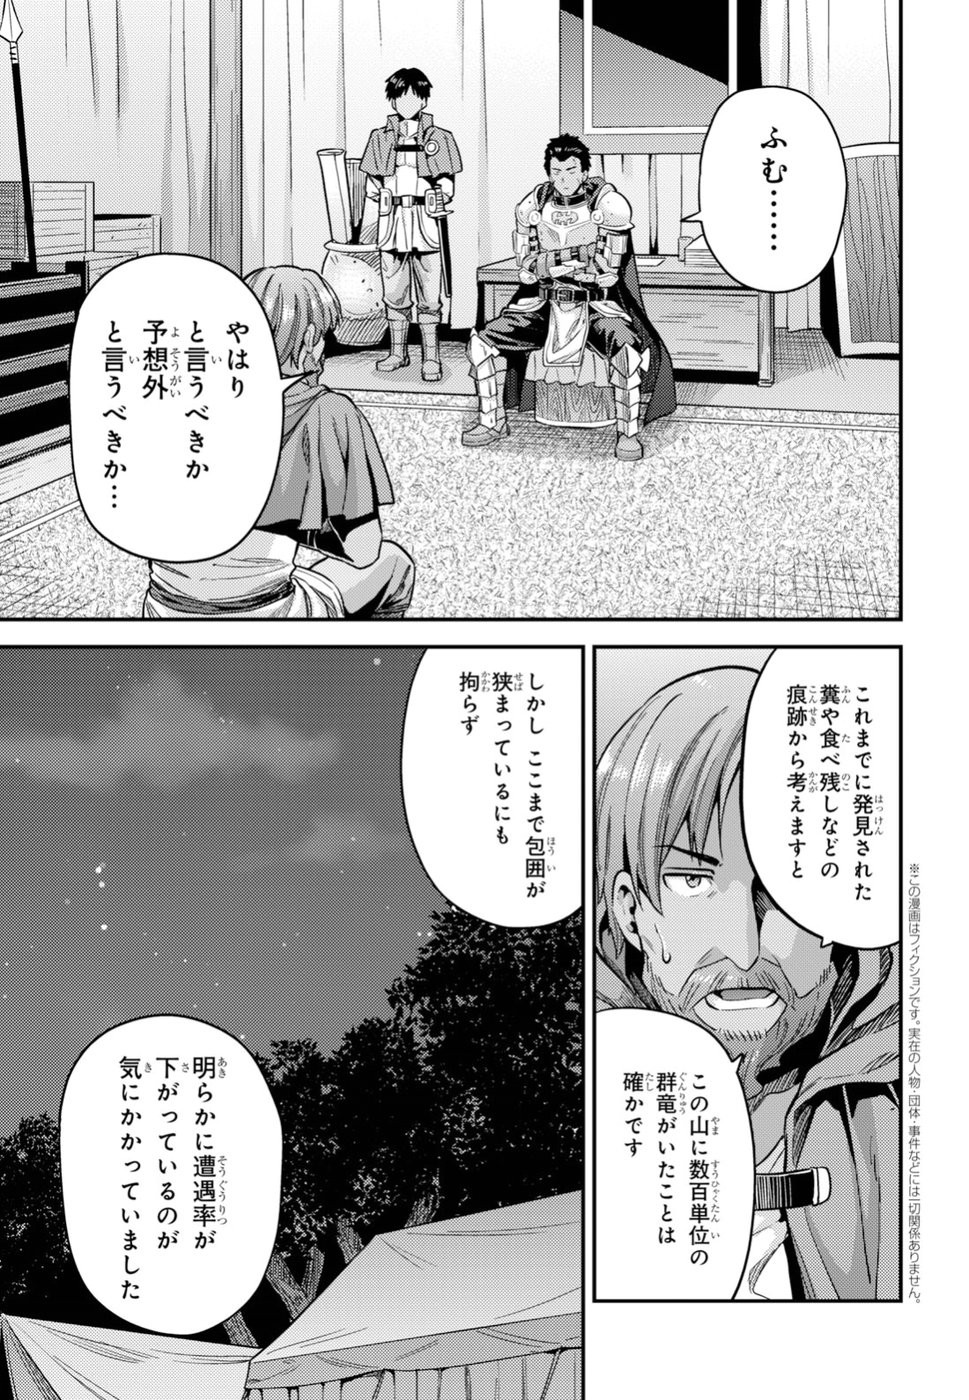 Risou no Himo Seikatsu - Chapter 028 - Page 3